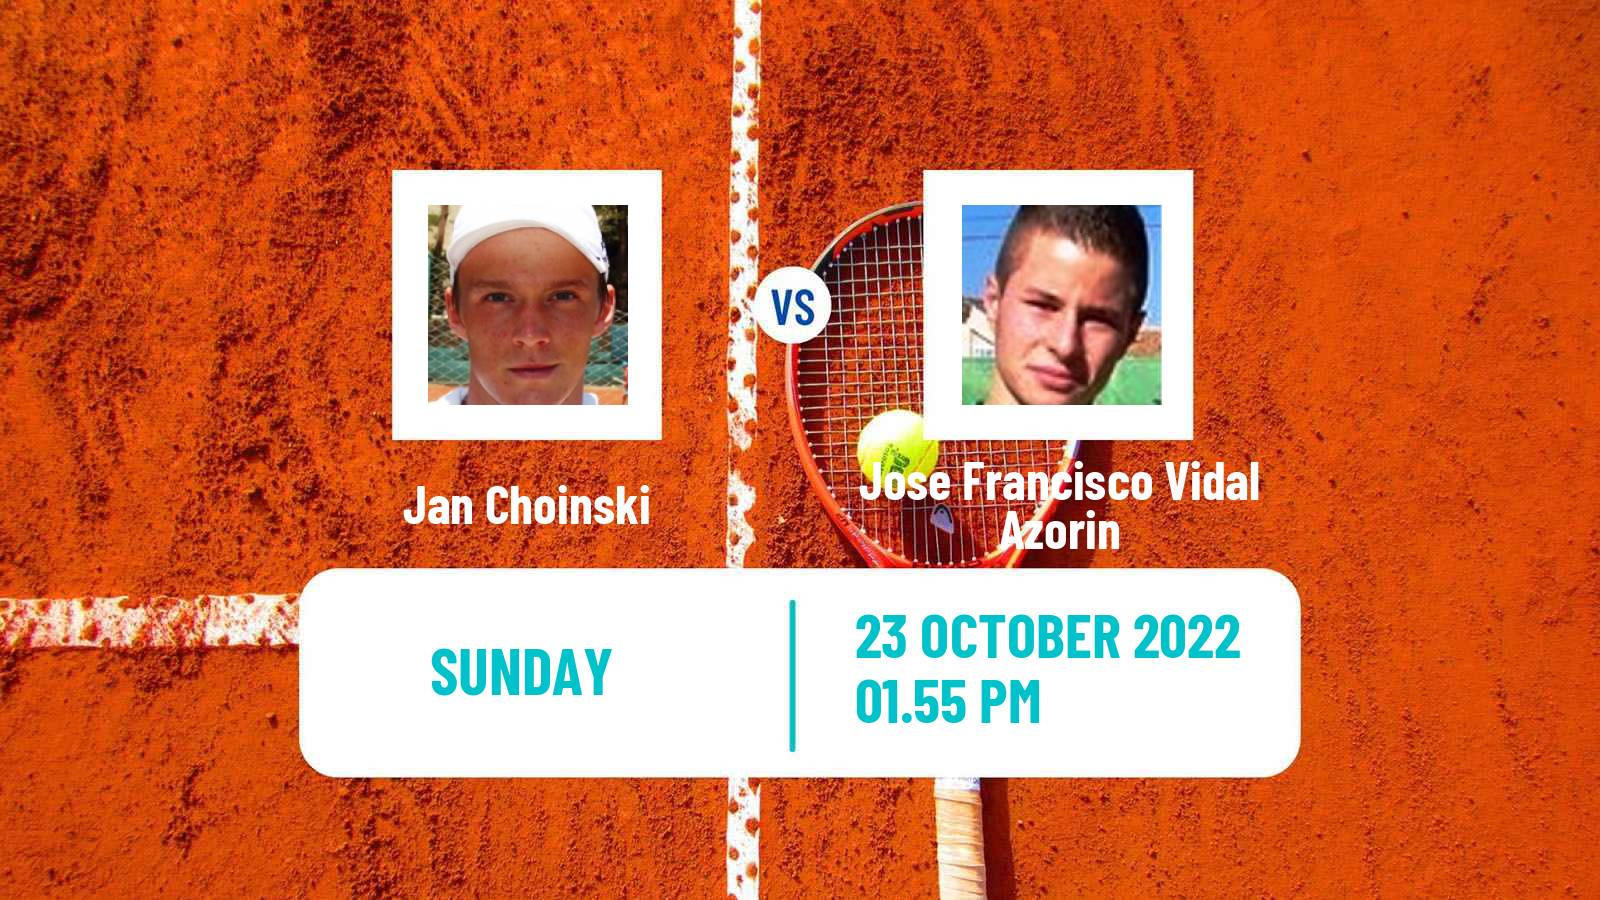 Tennis ATP Challenger Jan Choinski - Jose Francisco Vidal Azorin